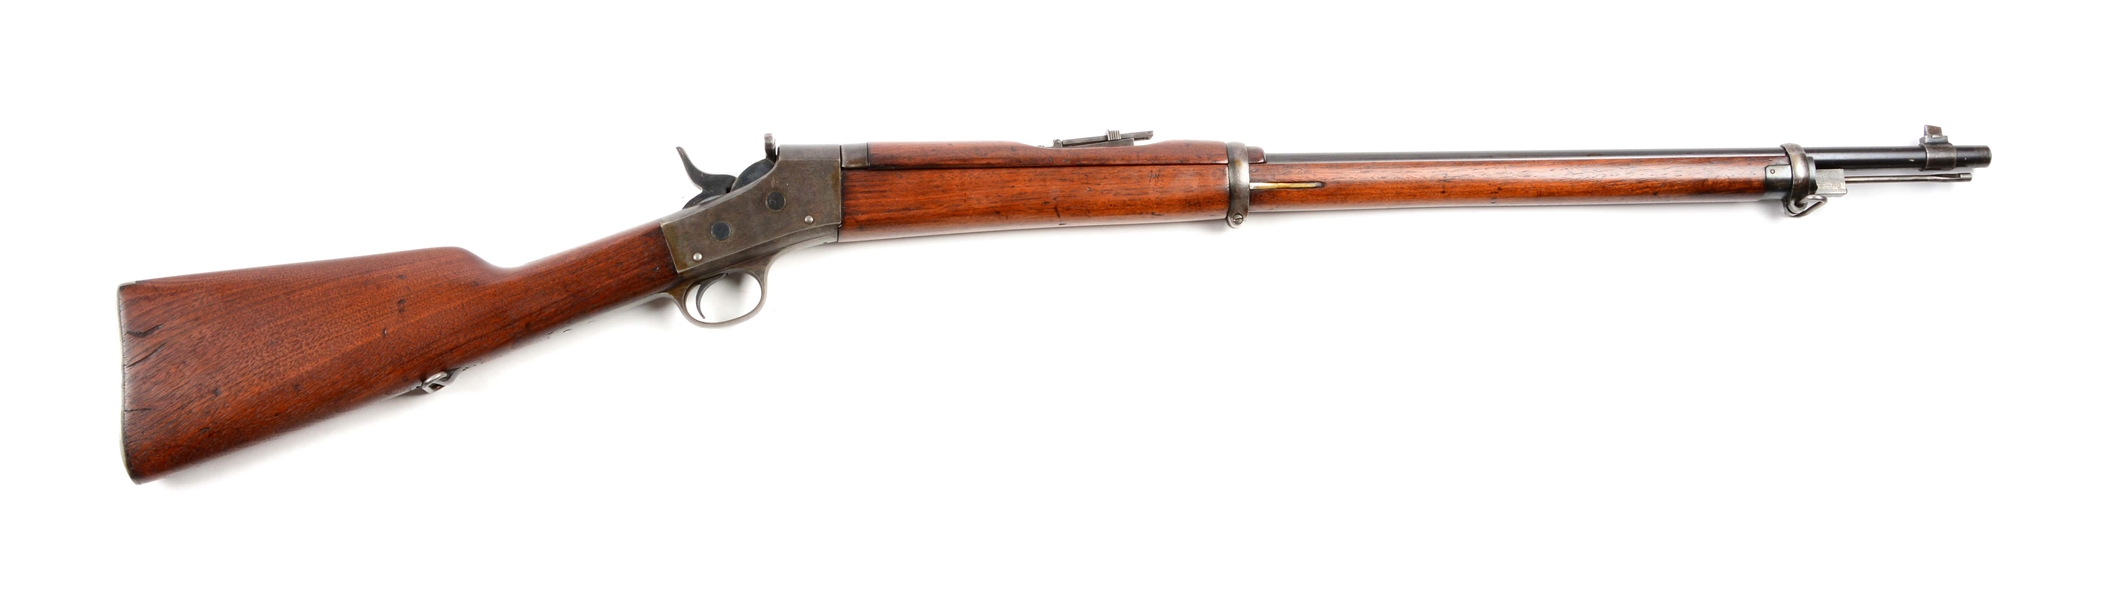 (C) REMINGTON-RIDER MODEL 1902 MILITARY BREECH LOADING SINGLE SHOT RIFLE.